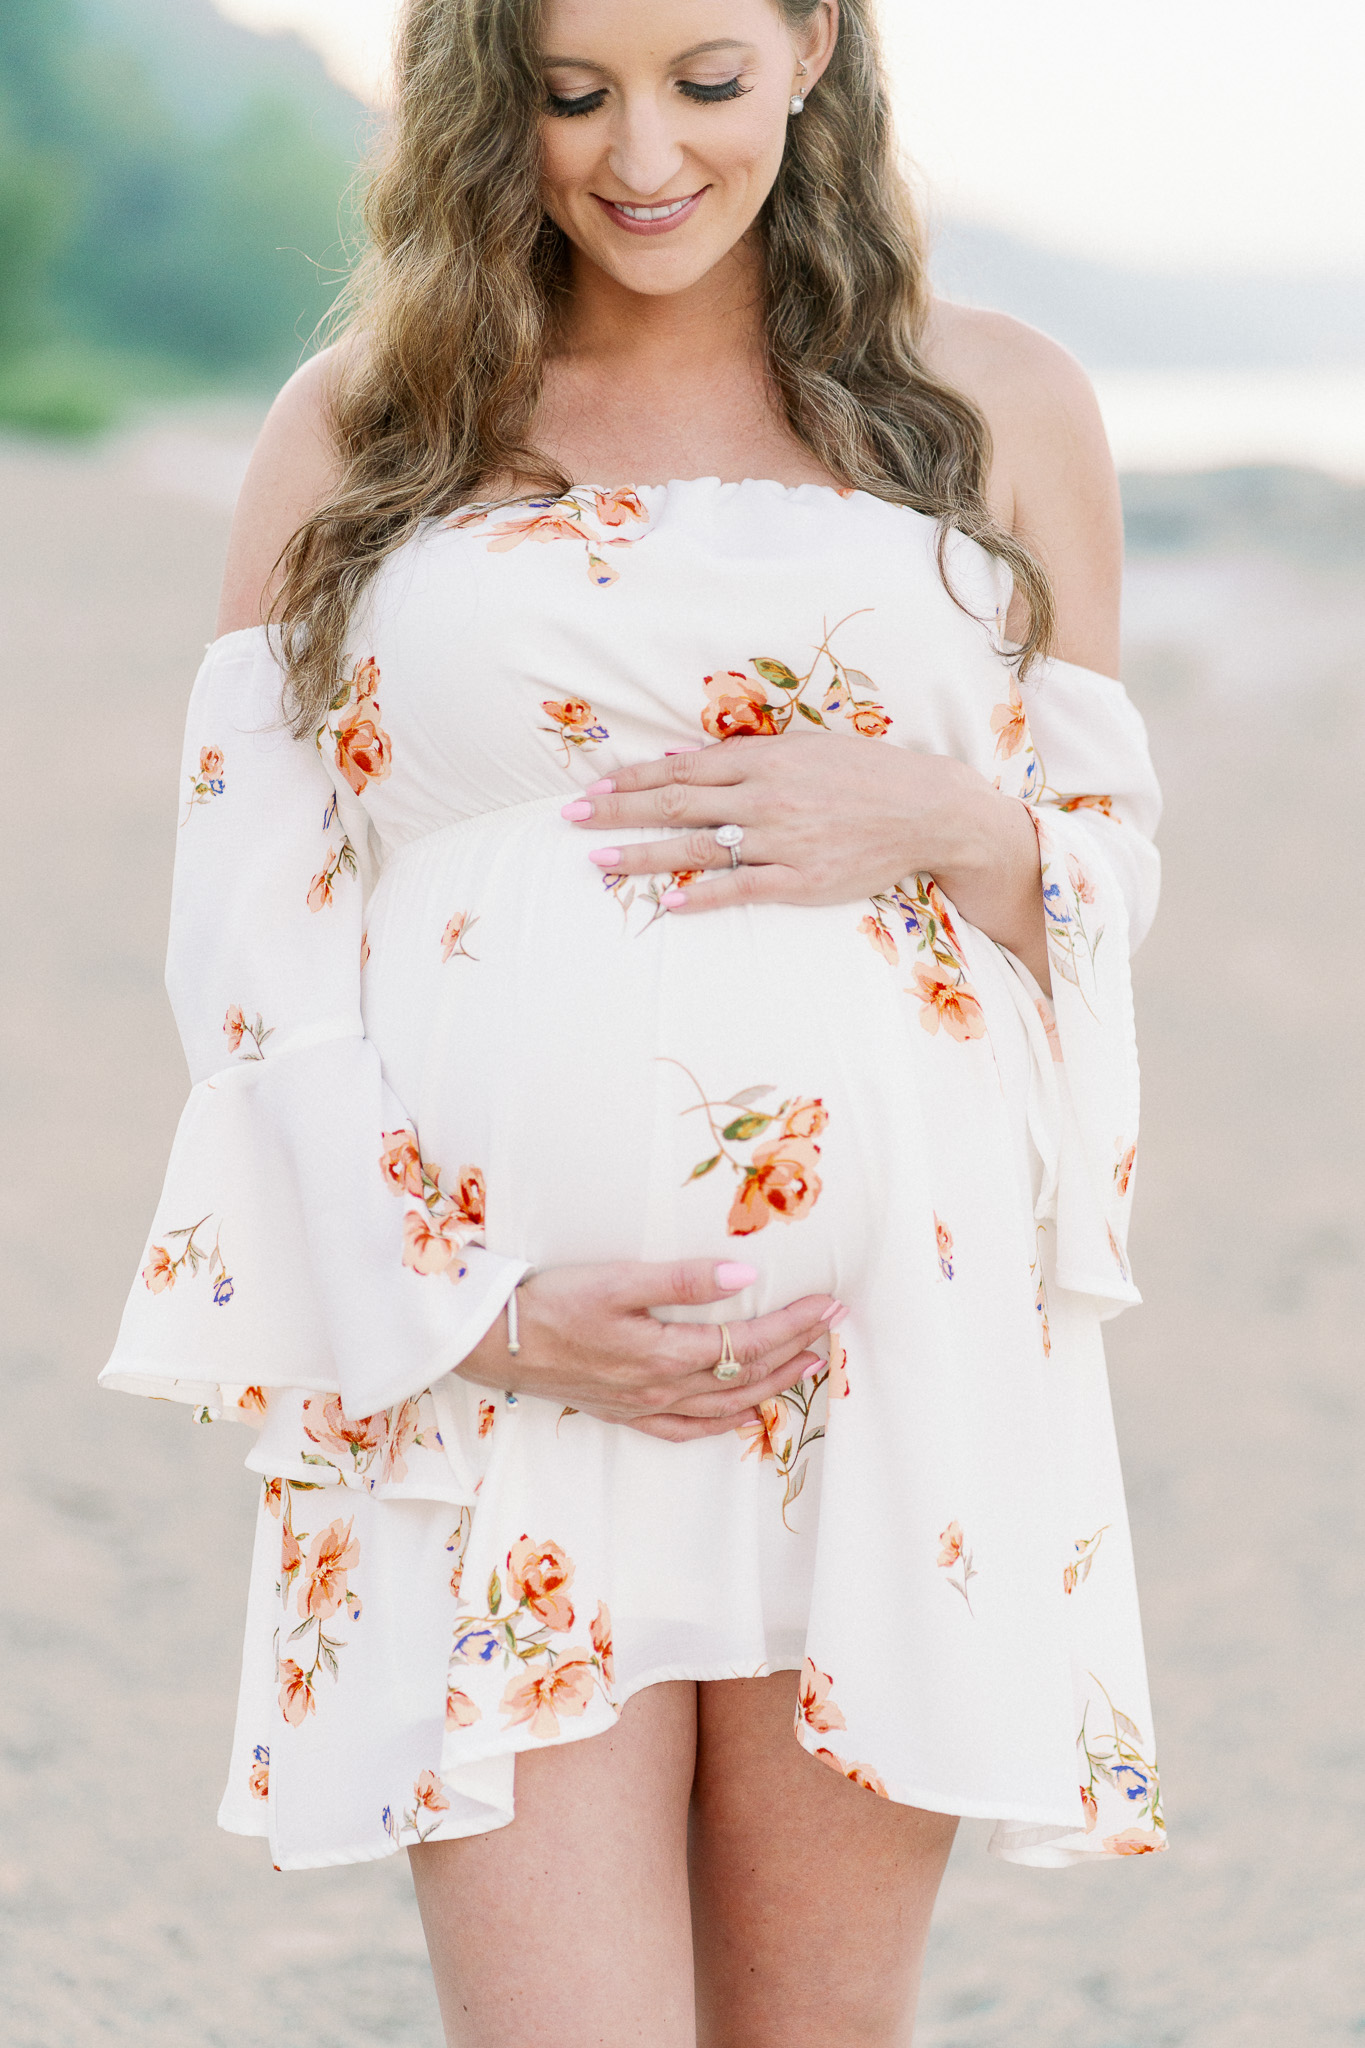 Florida Beach Maternity Photos – Naples Maternity Photographer-64